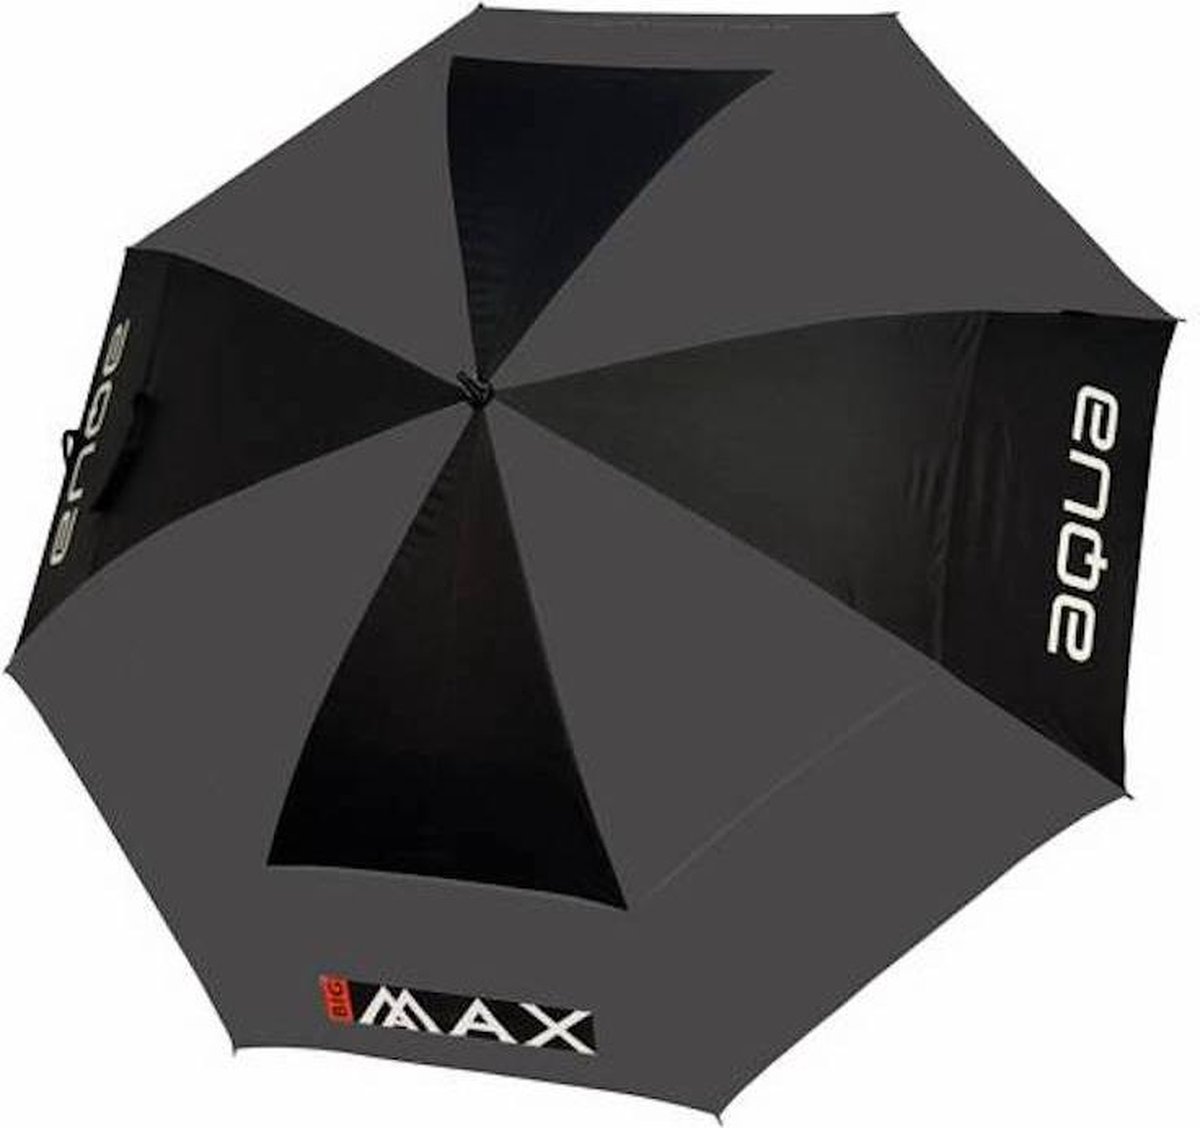 Big Max Aqua XL UV golfparaplu (zwart/grijs) - BigMax